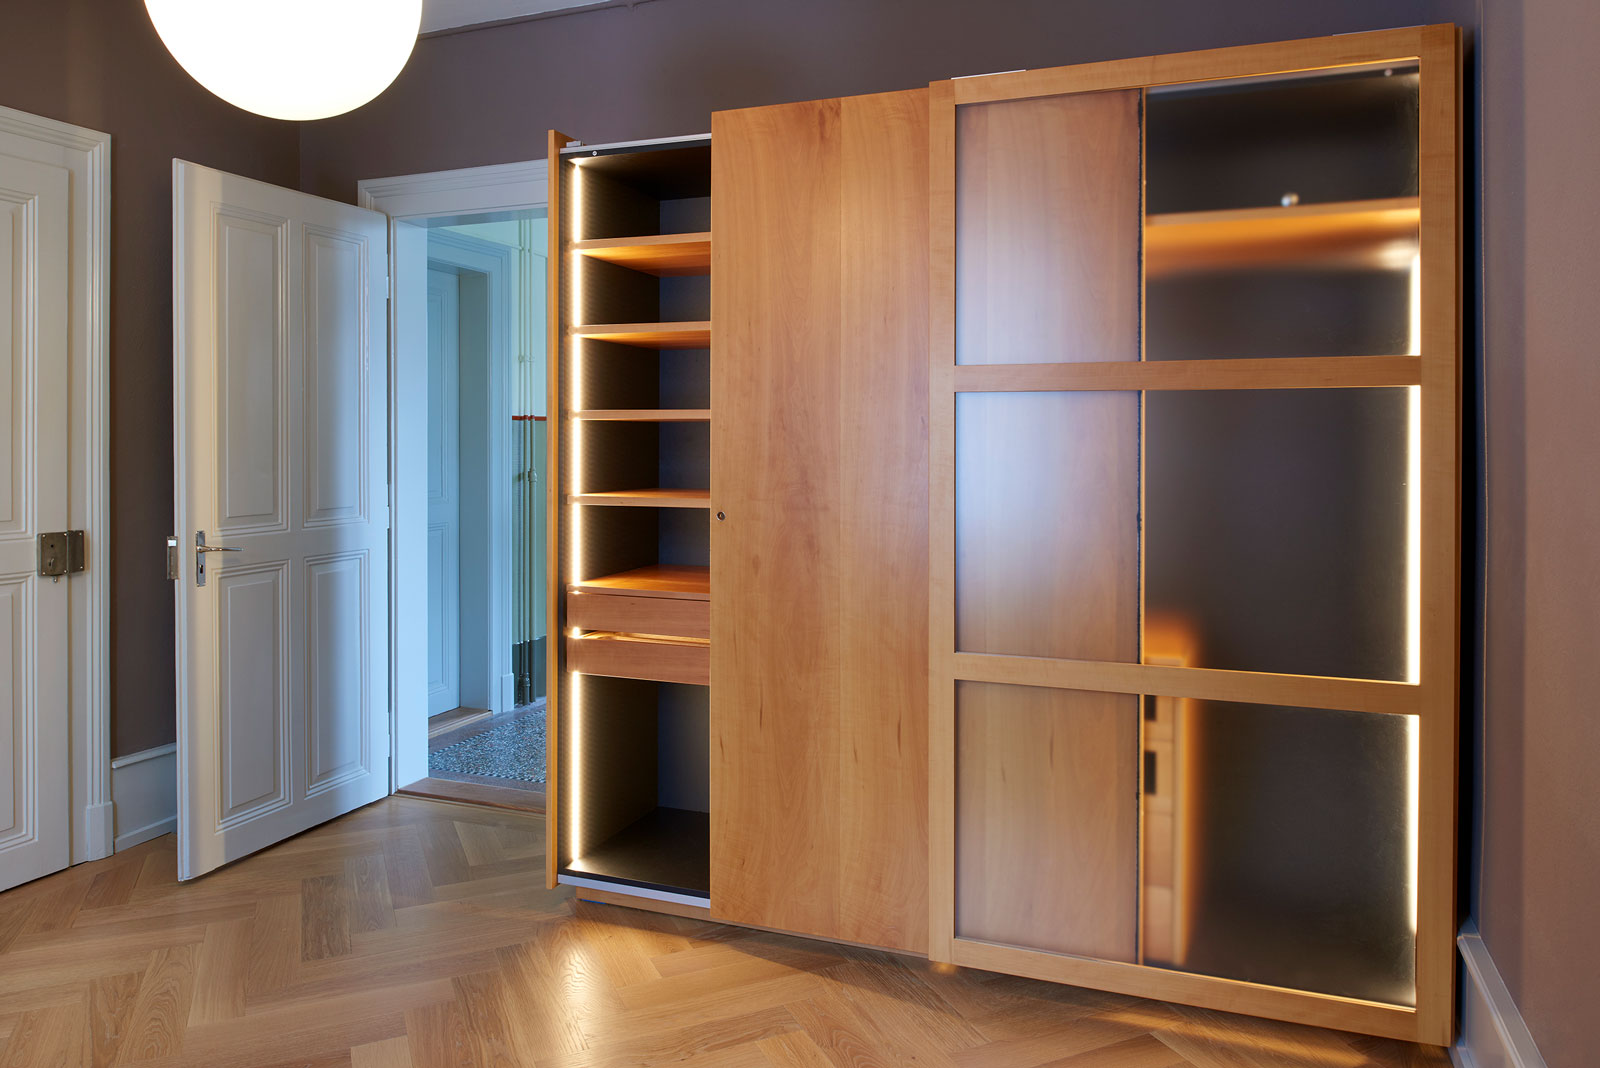 Sliding door cabinet with pear tree; Design carpenter, photo Alain Bucher